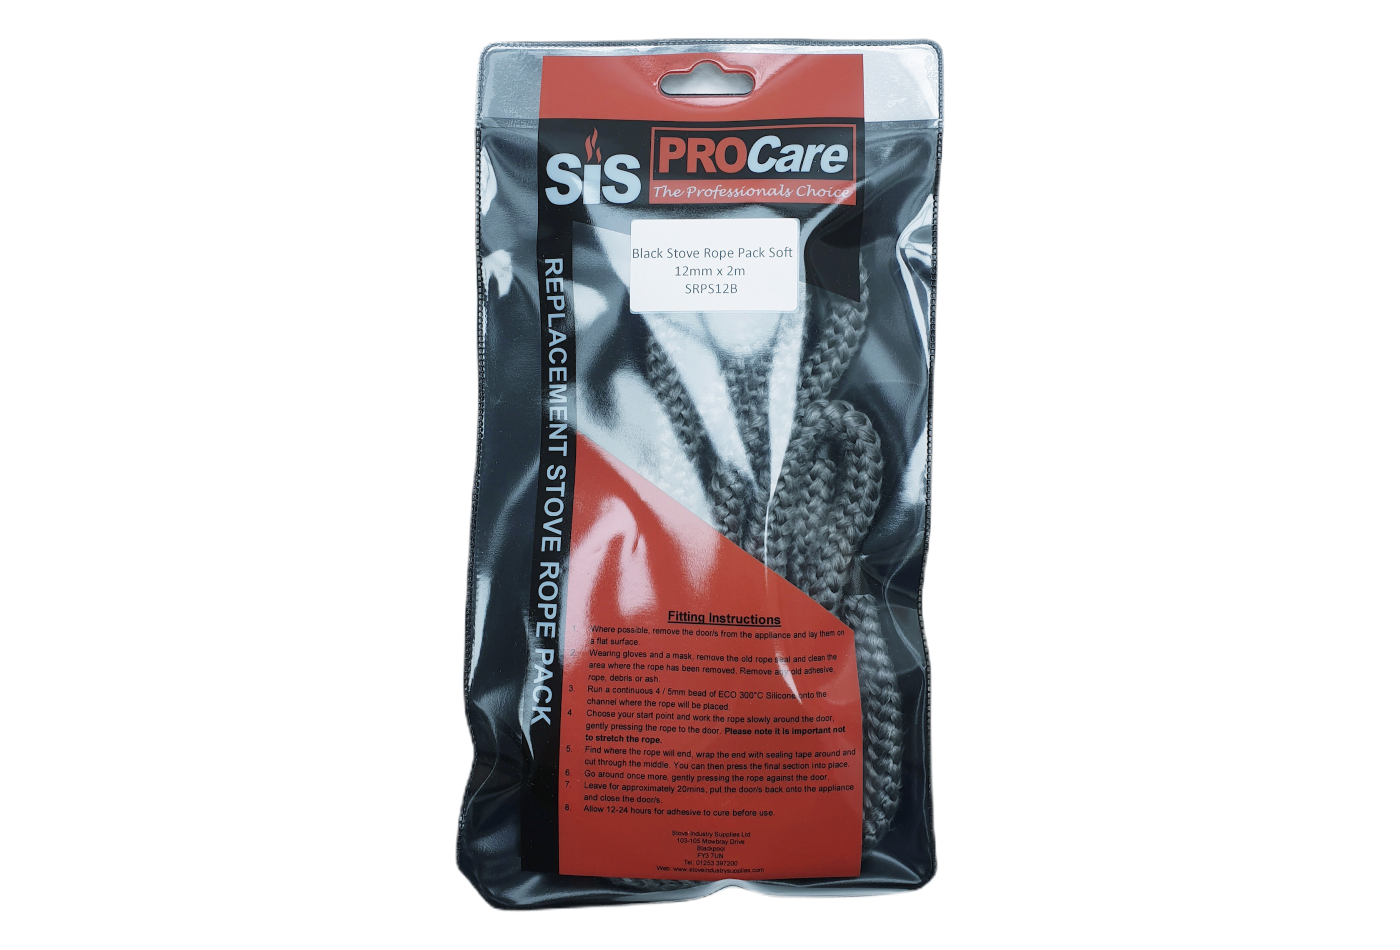 SiS Procare Black 12 milimetre x 2 metre Soft Stove Rope Pack - product code SRPS12B